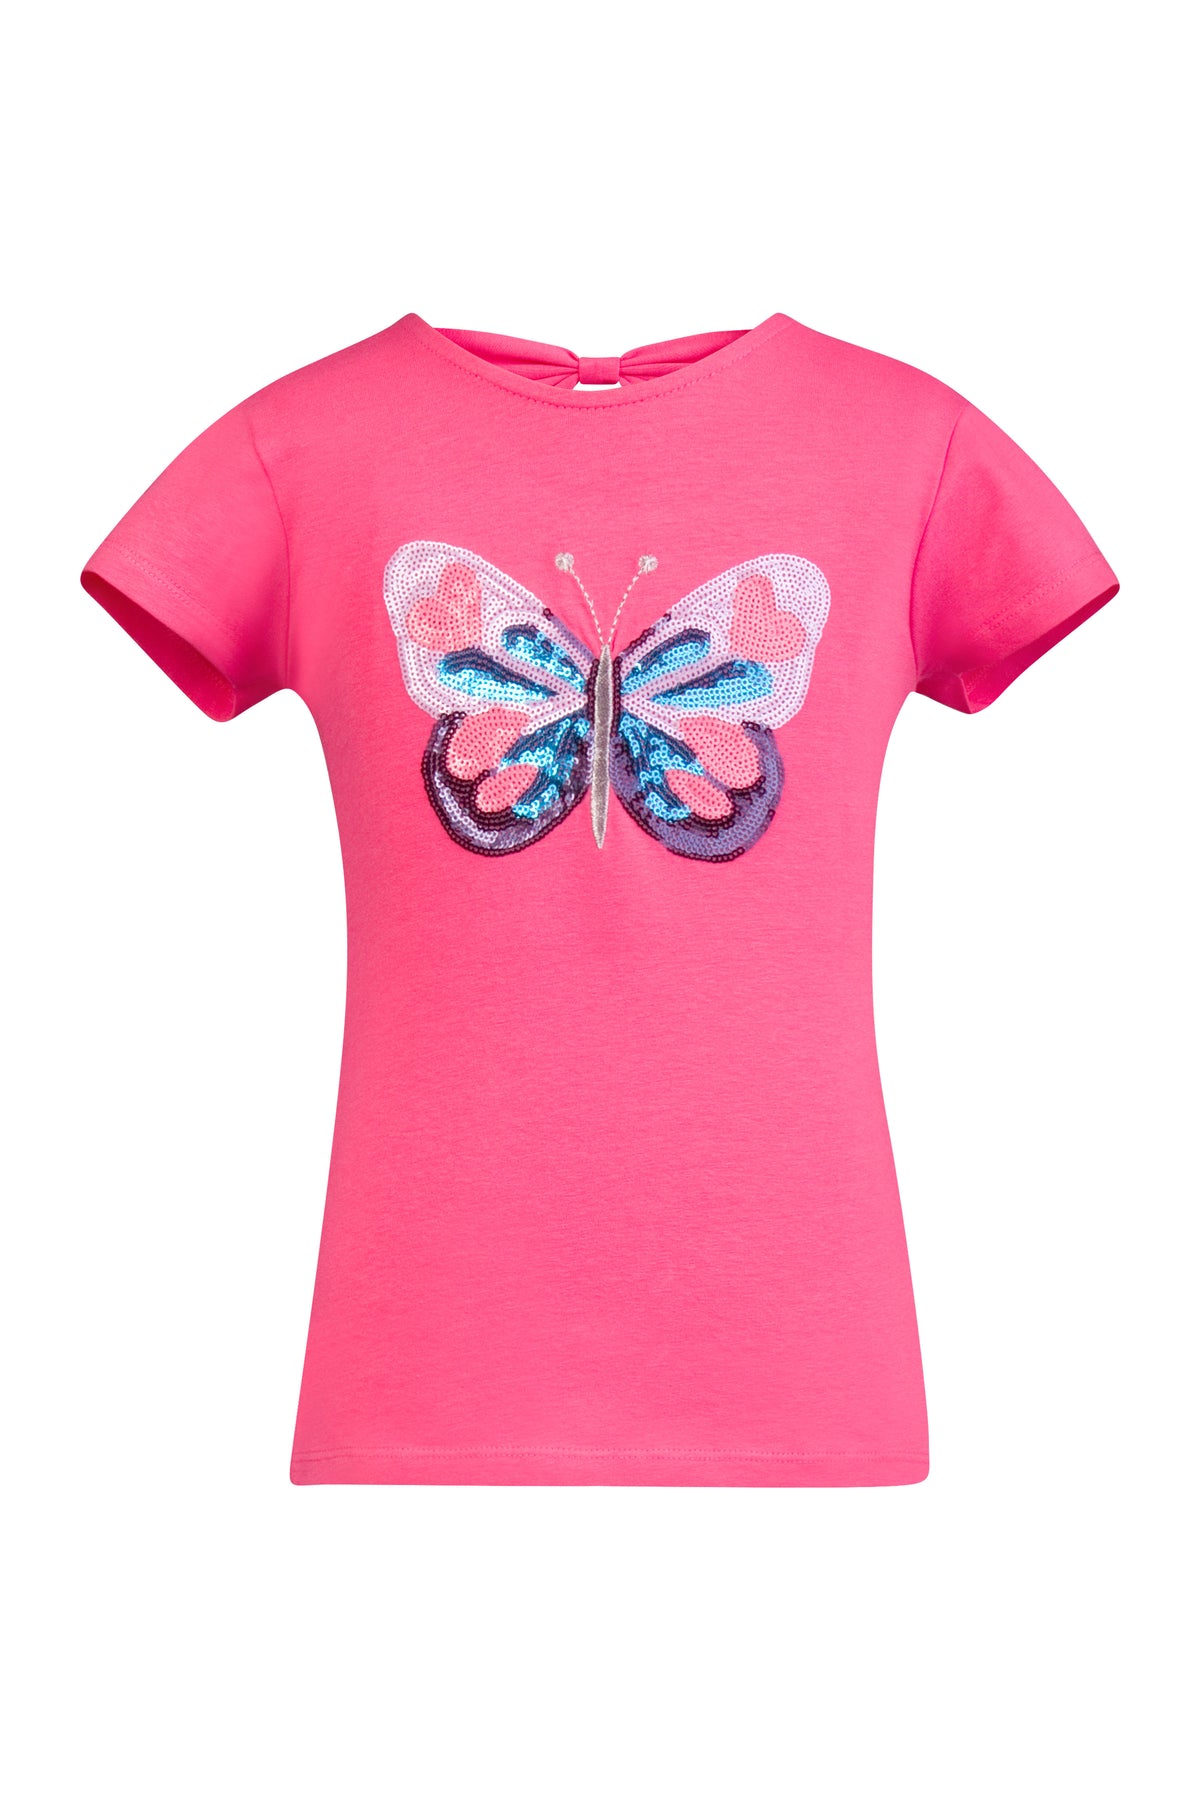 Mädchen T-Shirt Schmetterling Rosa 731305